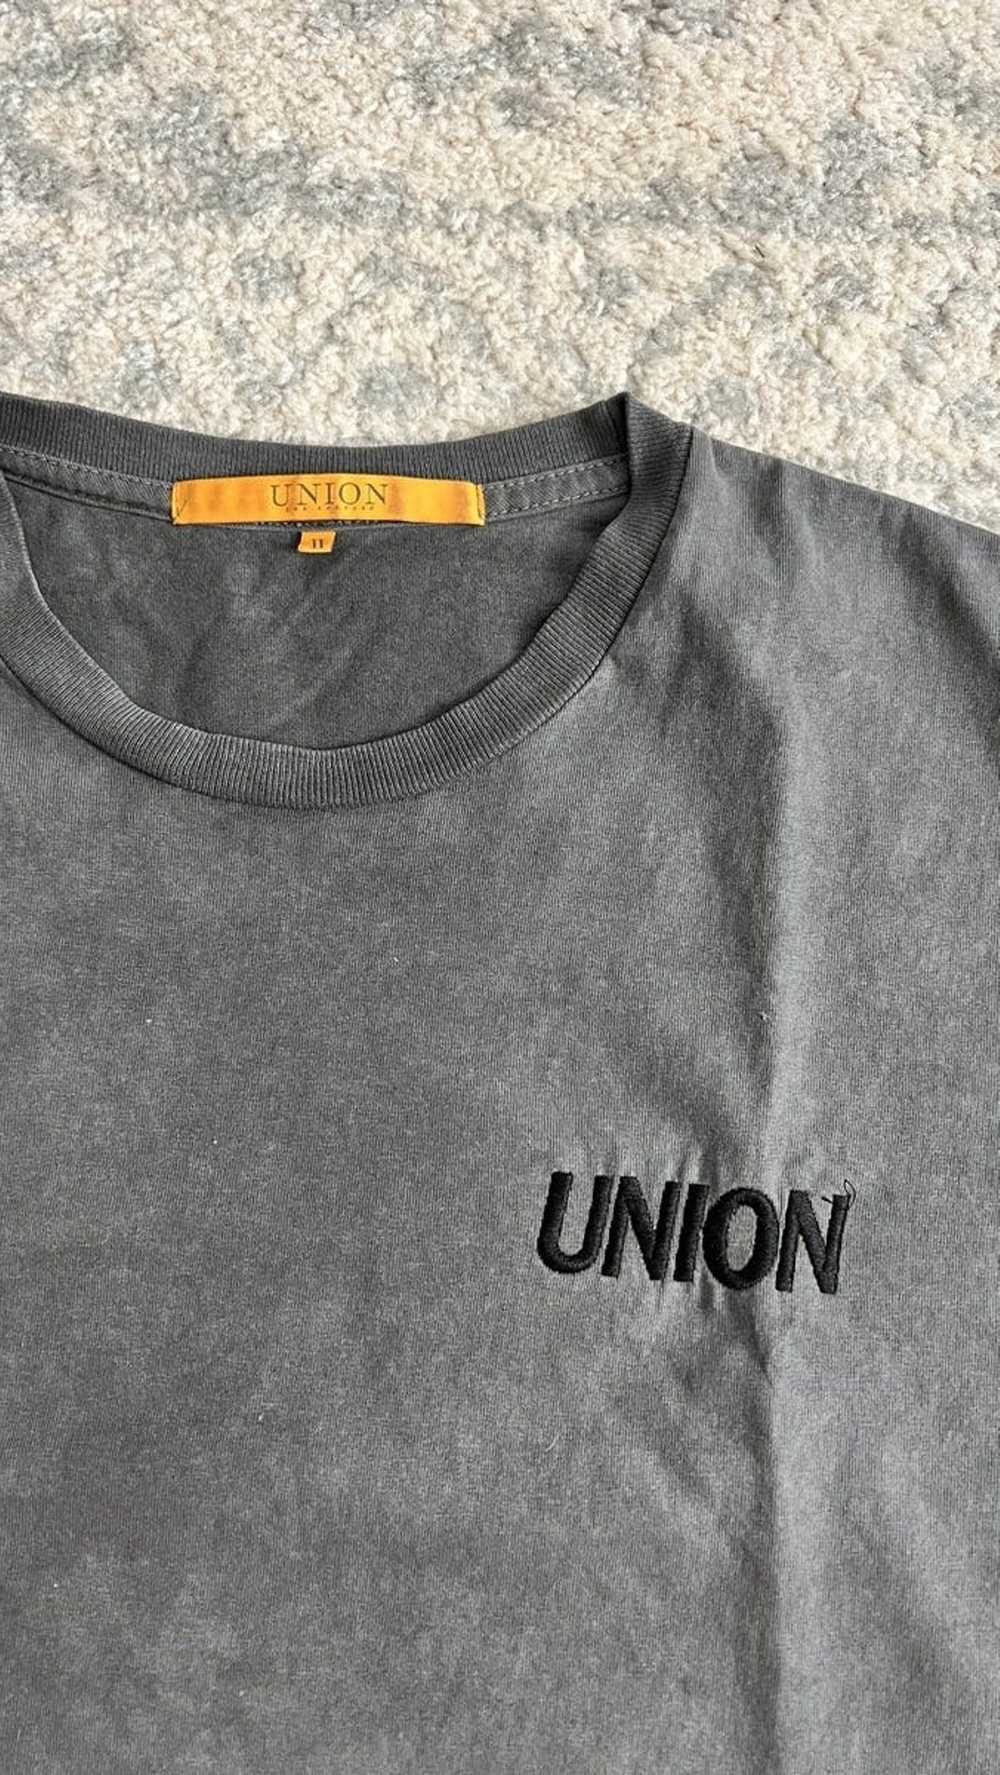 Union Union LA Dub tee - image 4